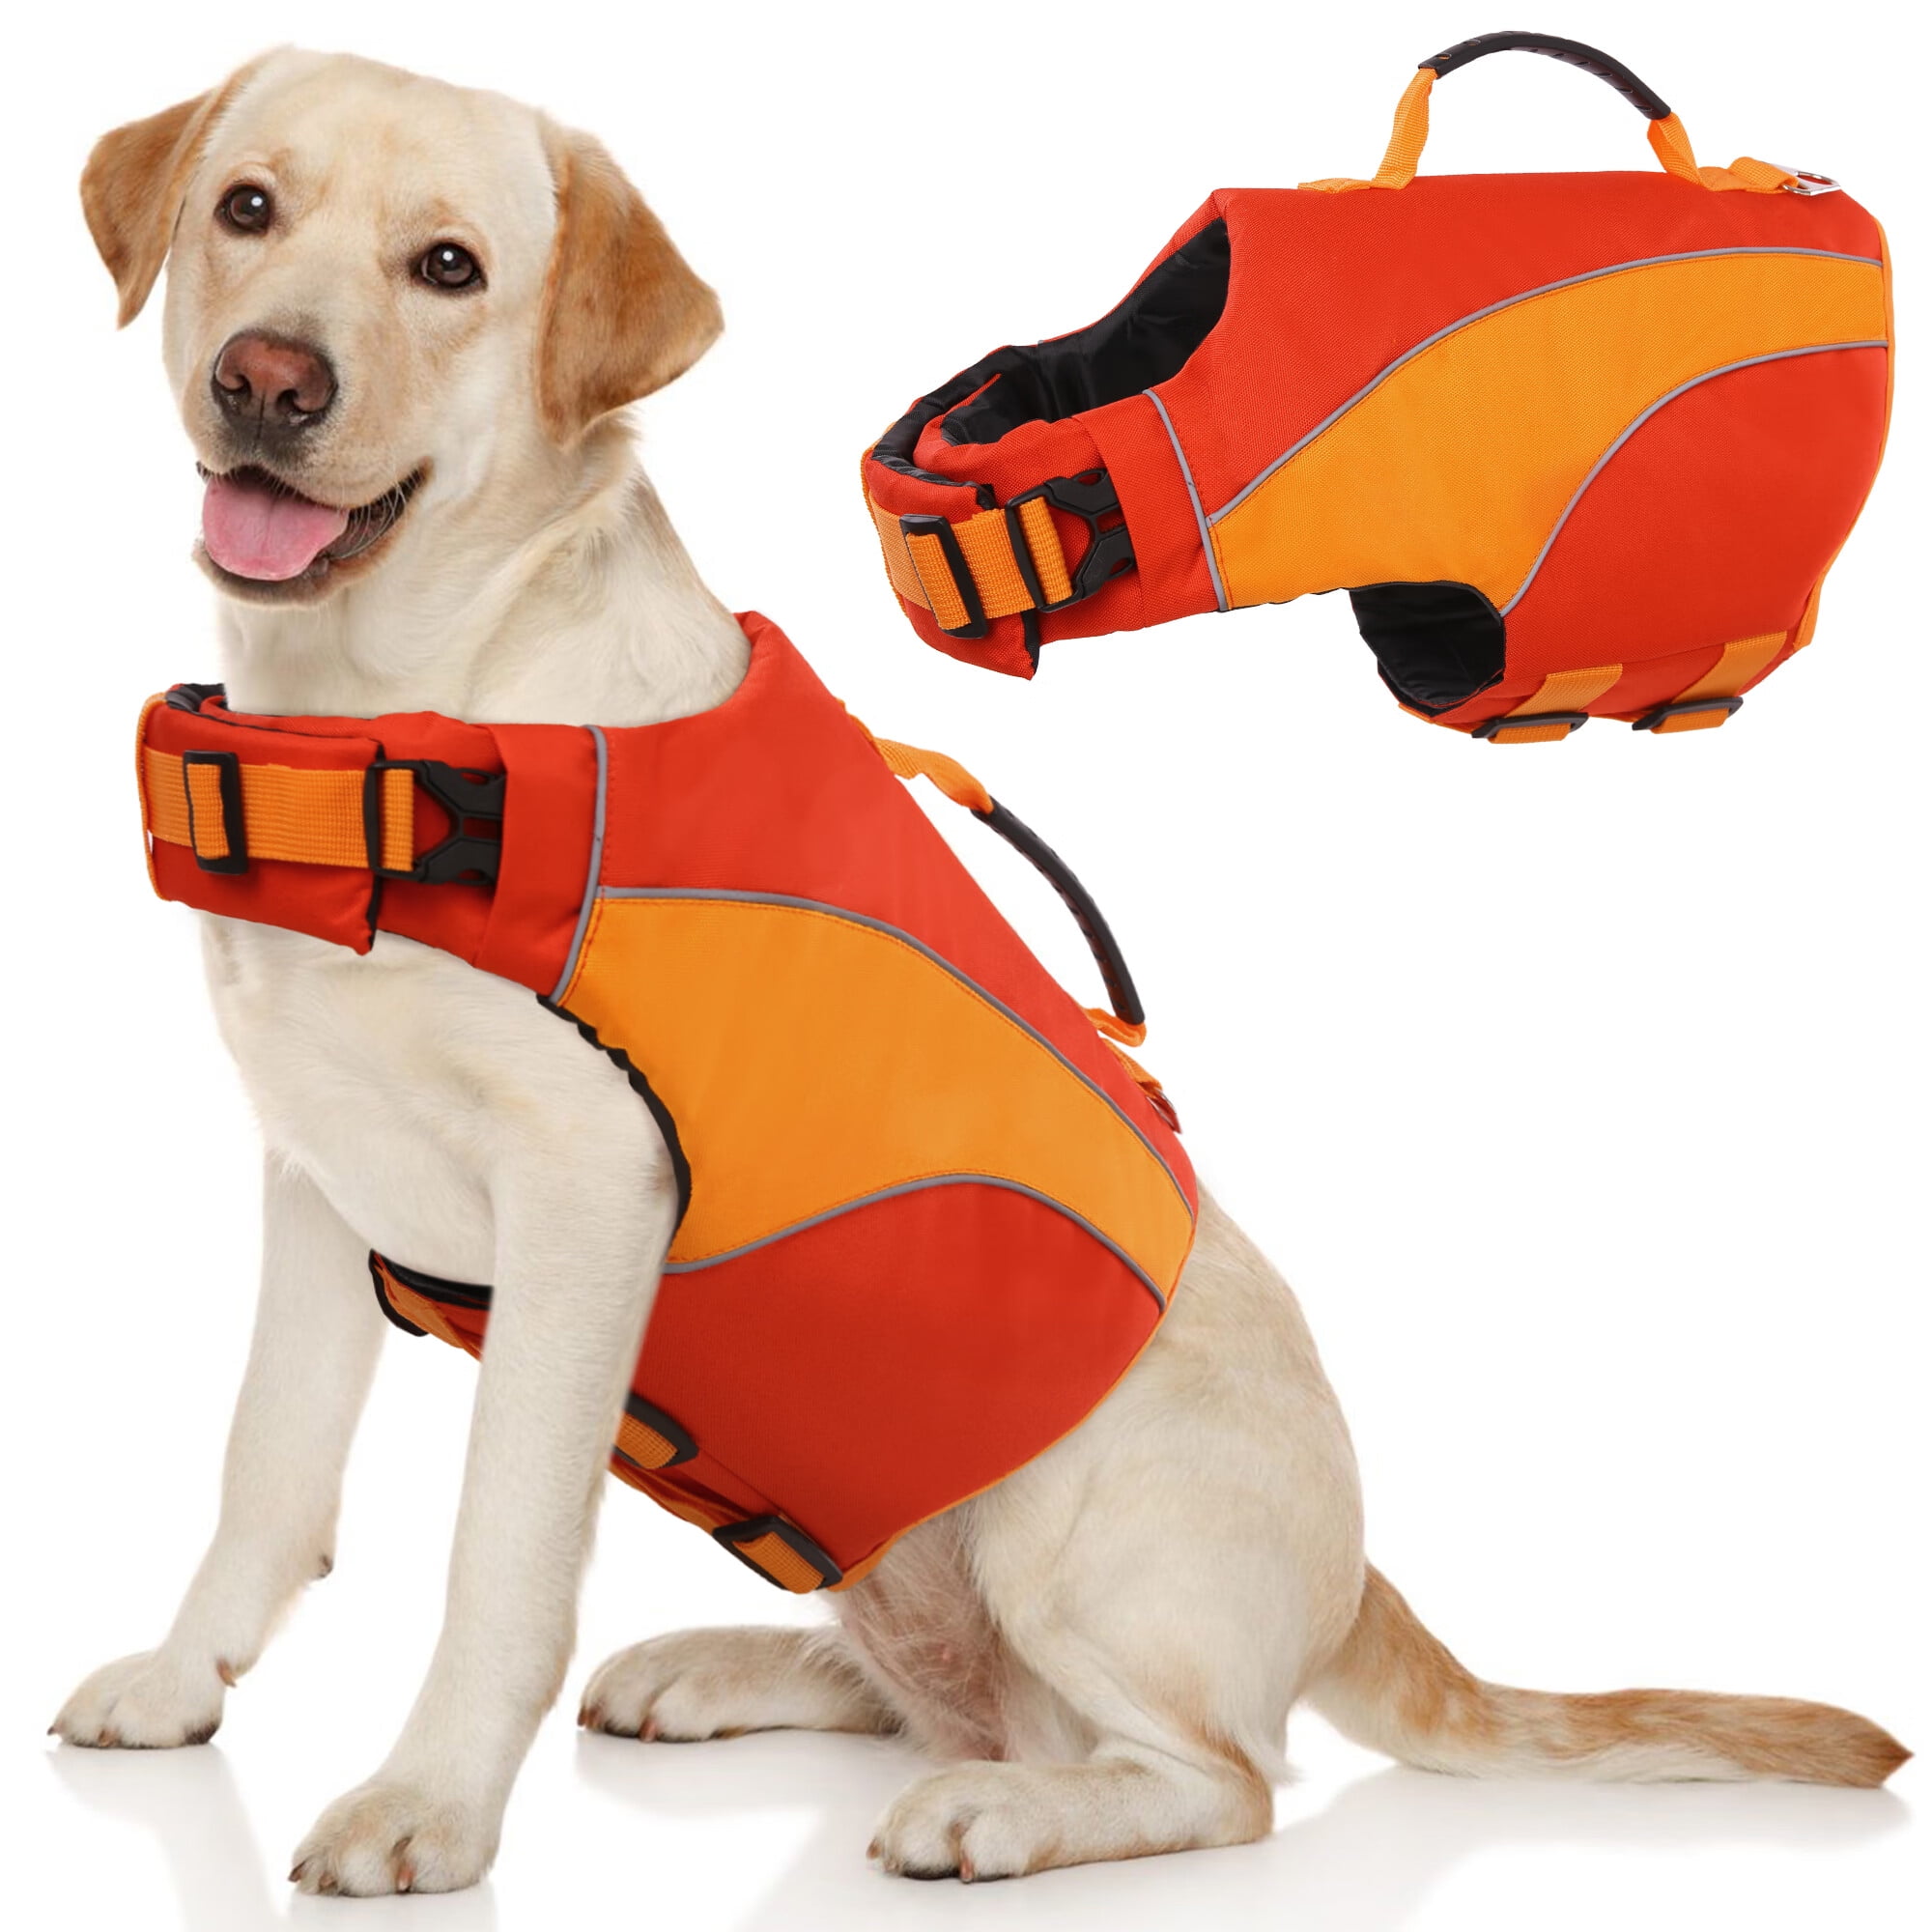 DOPI Dog Life Jacket, Safety Pet Flotation Life Vest with Reflective ...